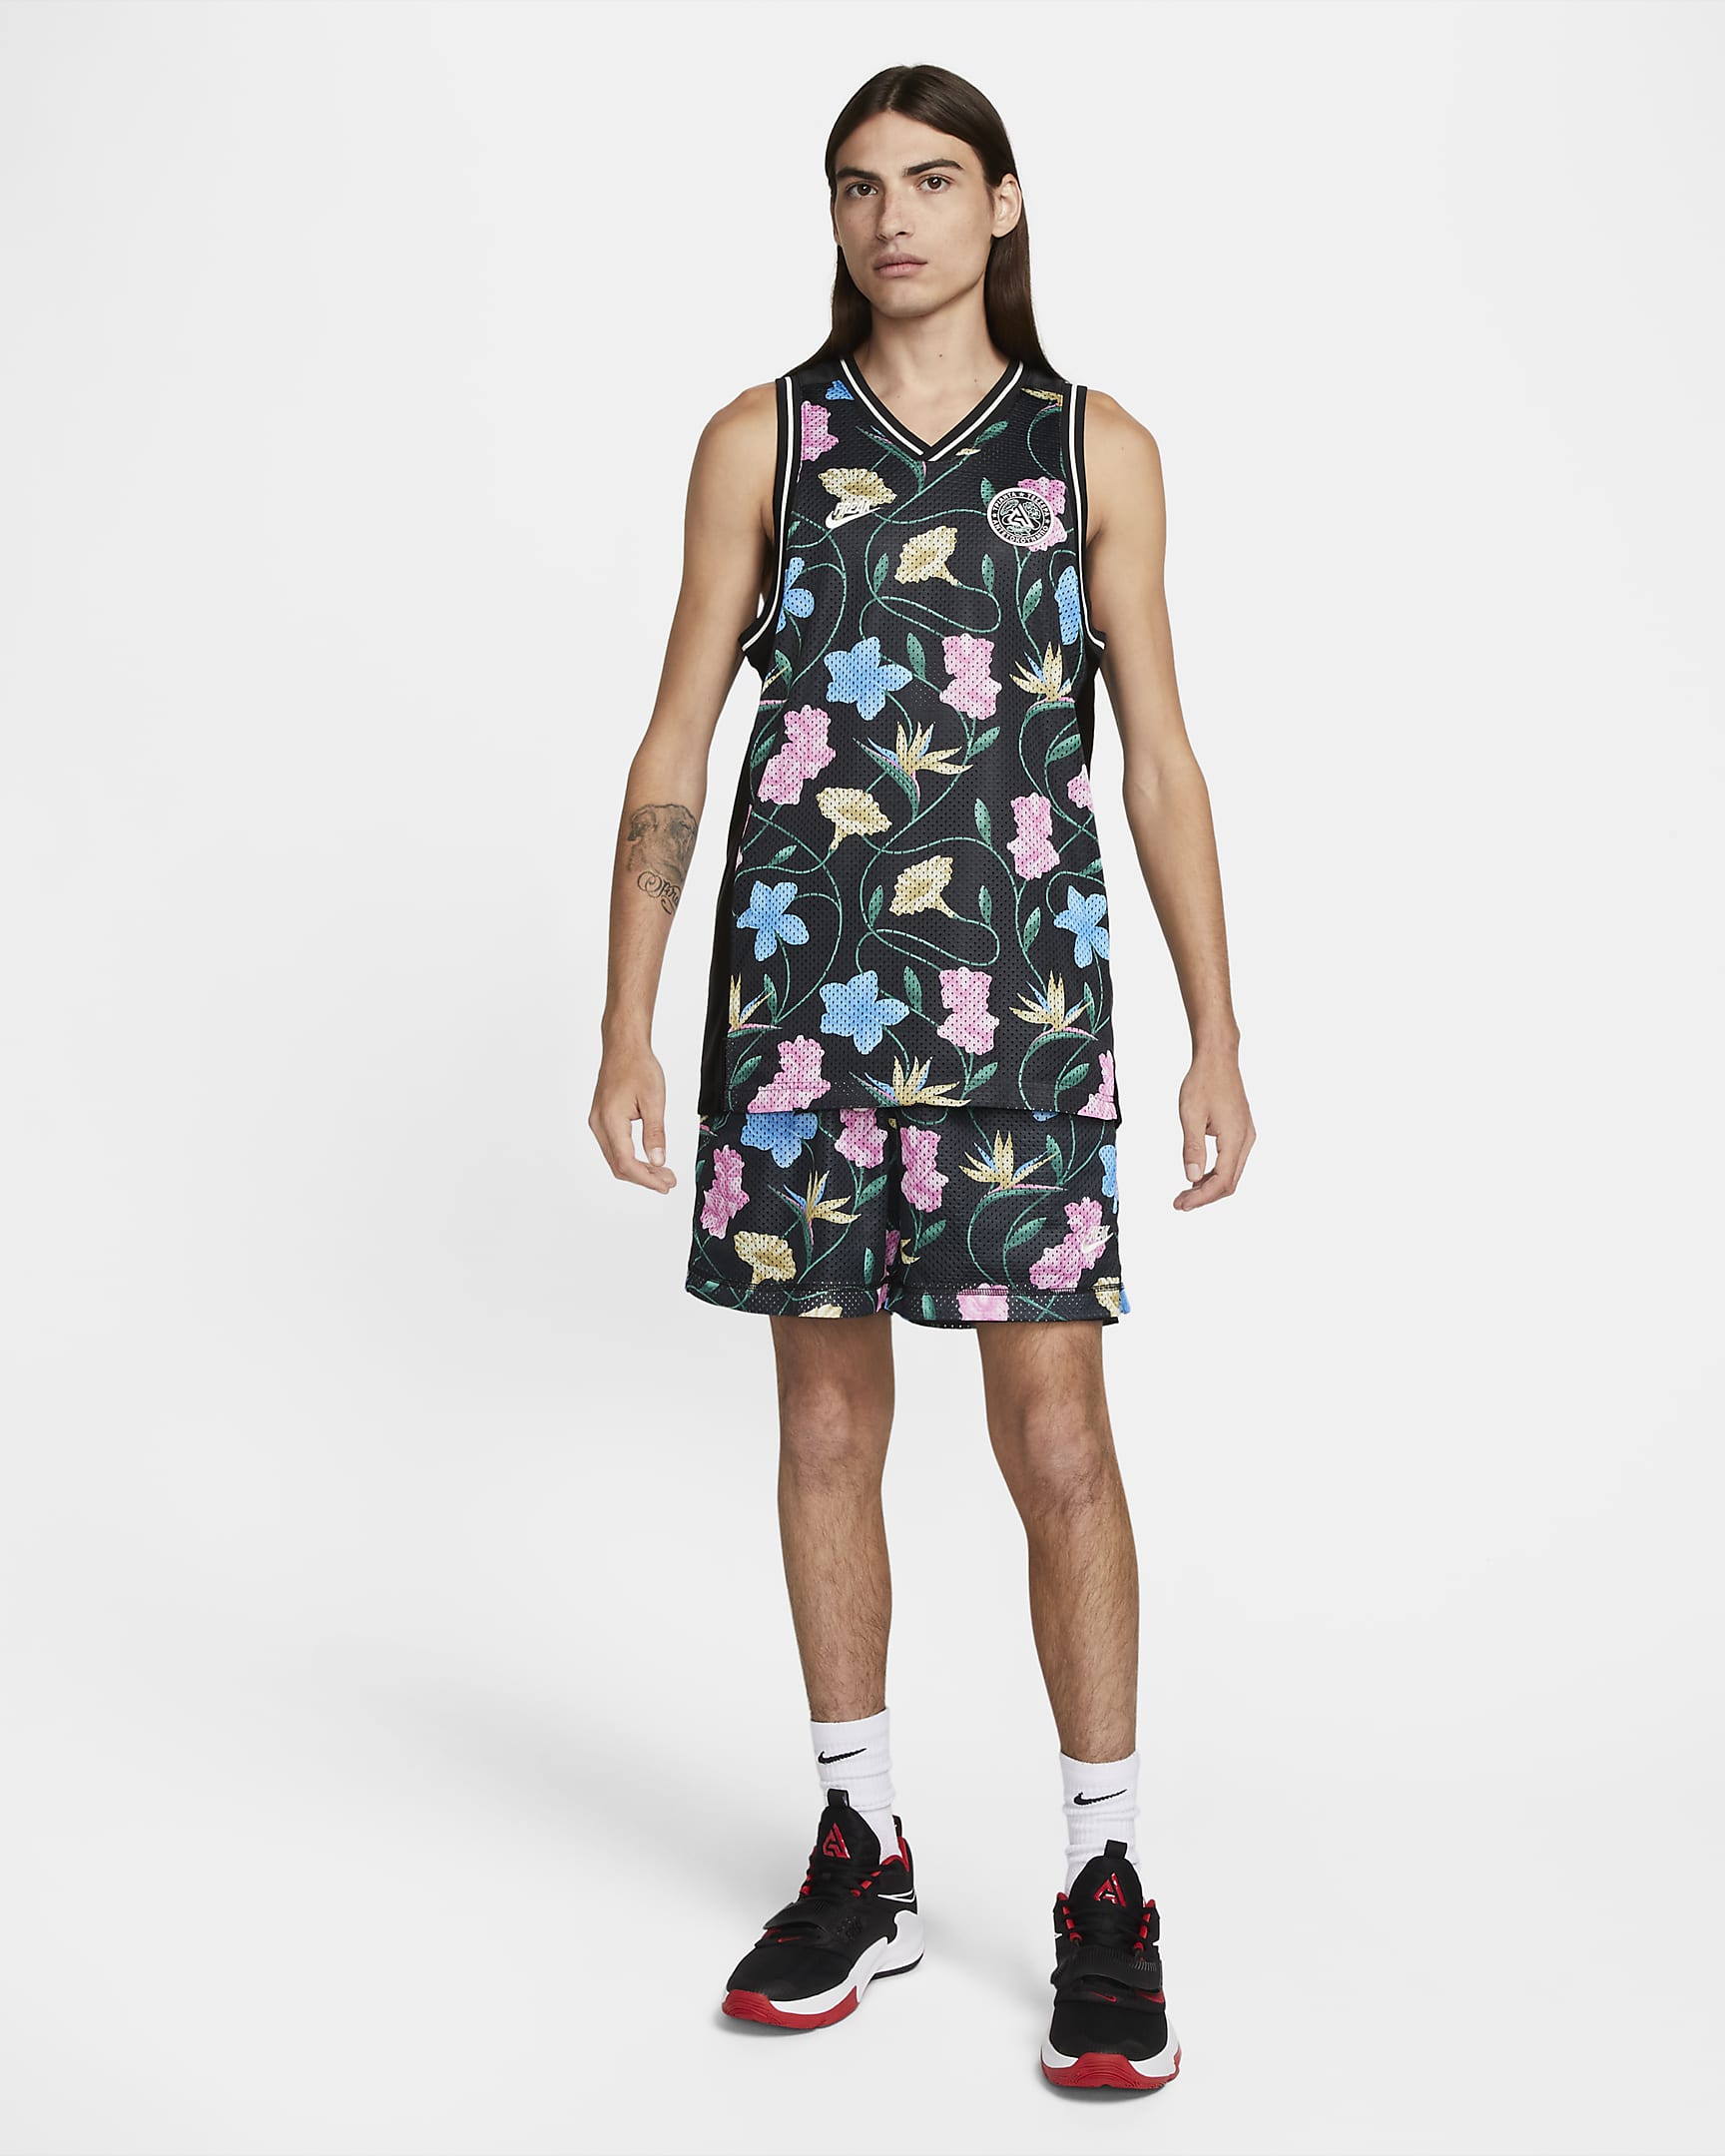 Giannis Men's Dri-FIT Printed DNA Basketball Jersey. Nike CA